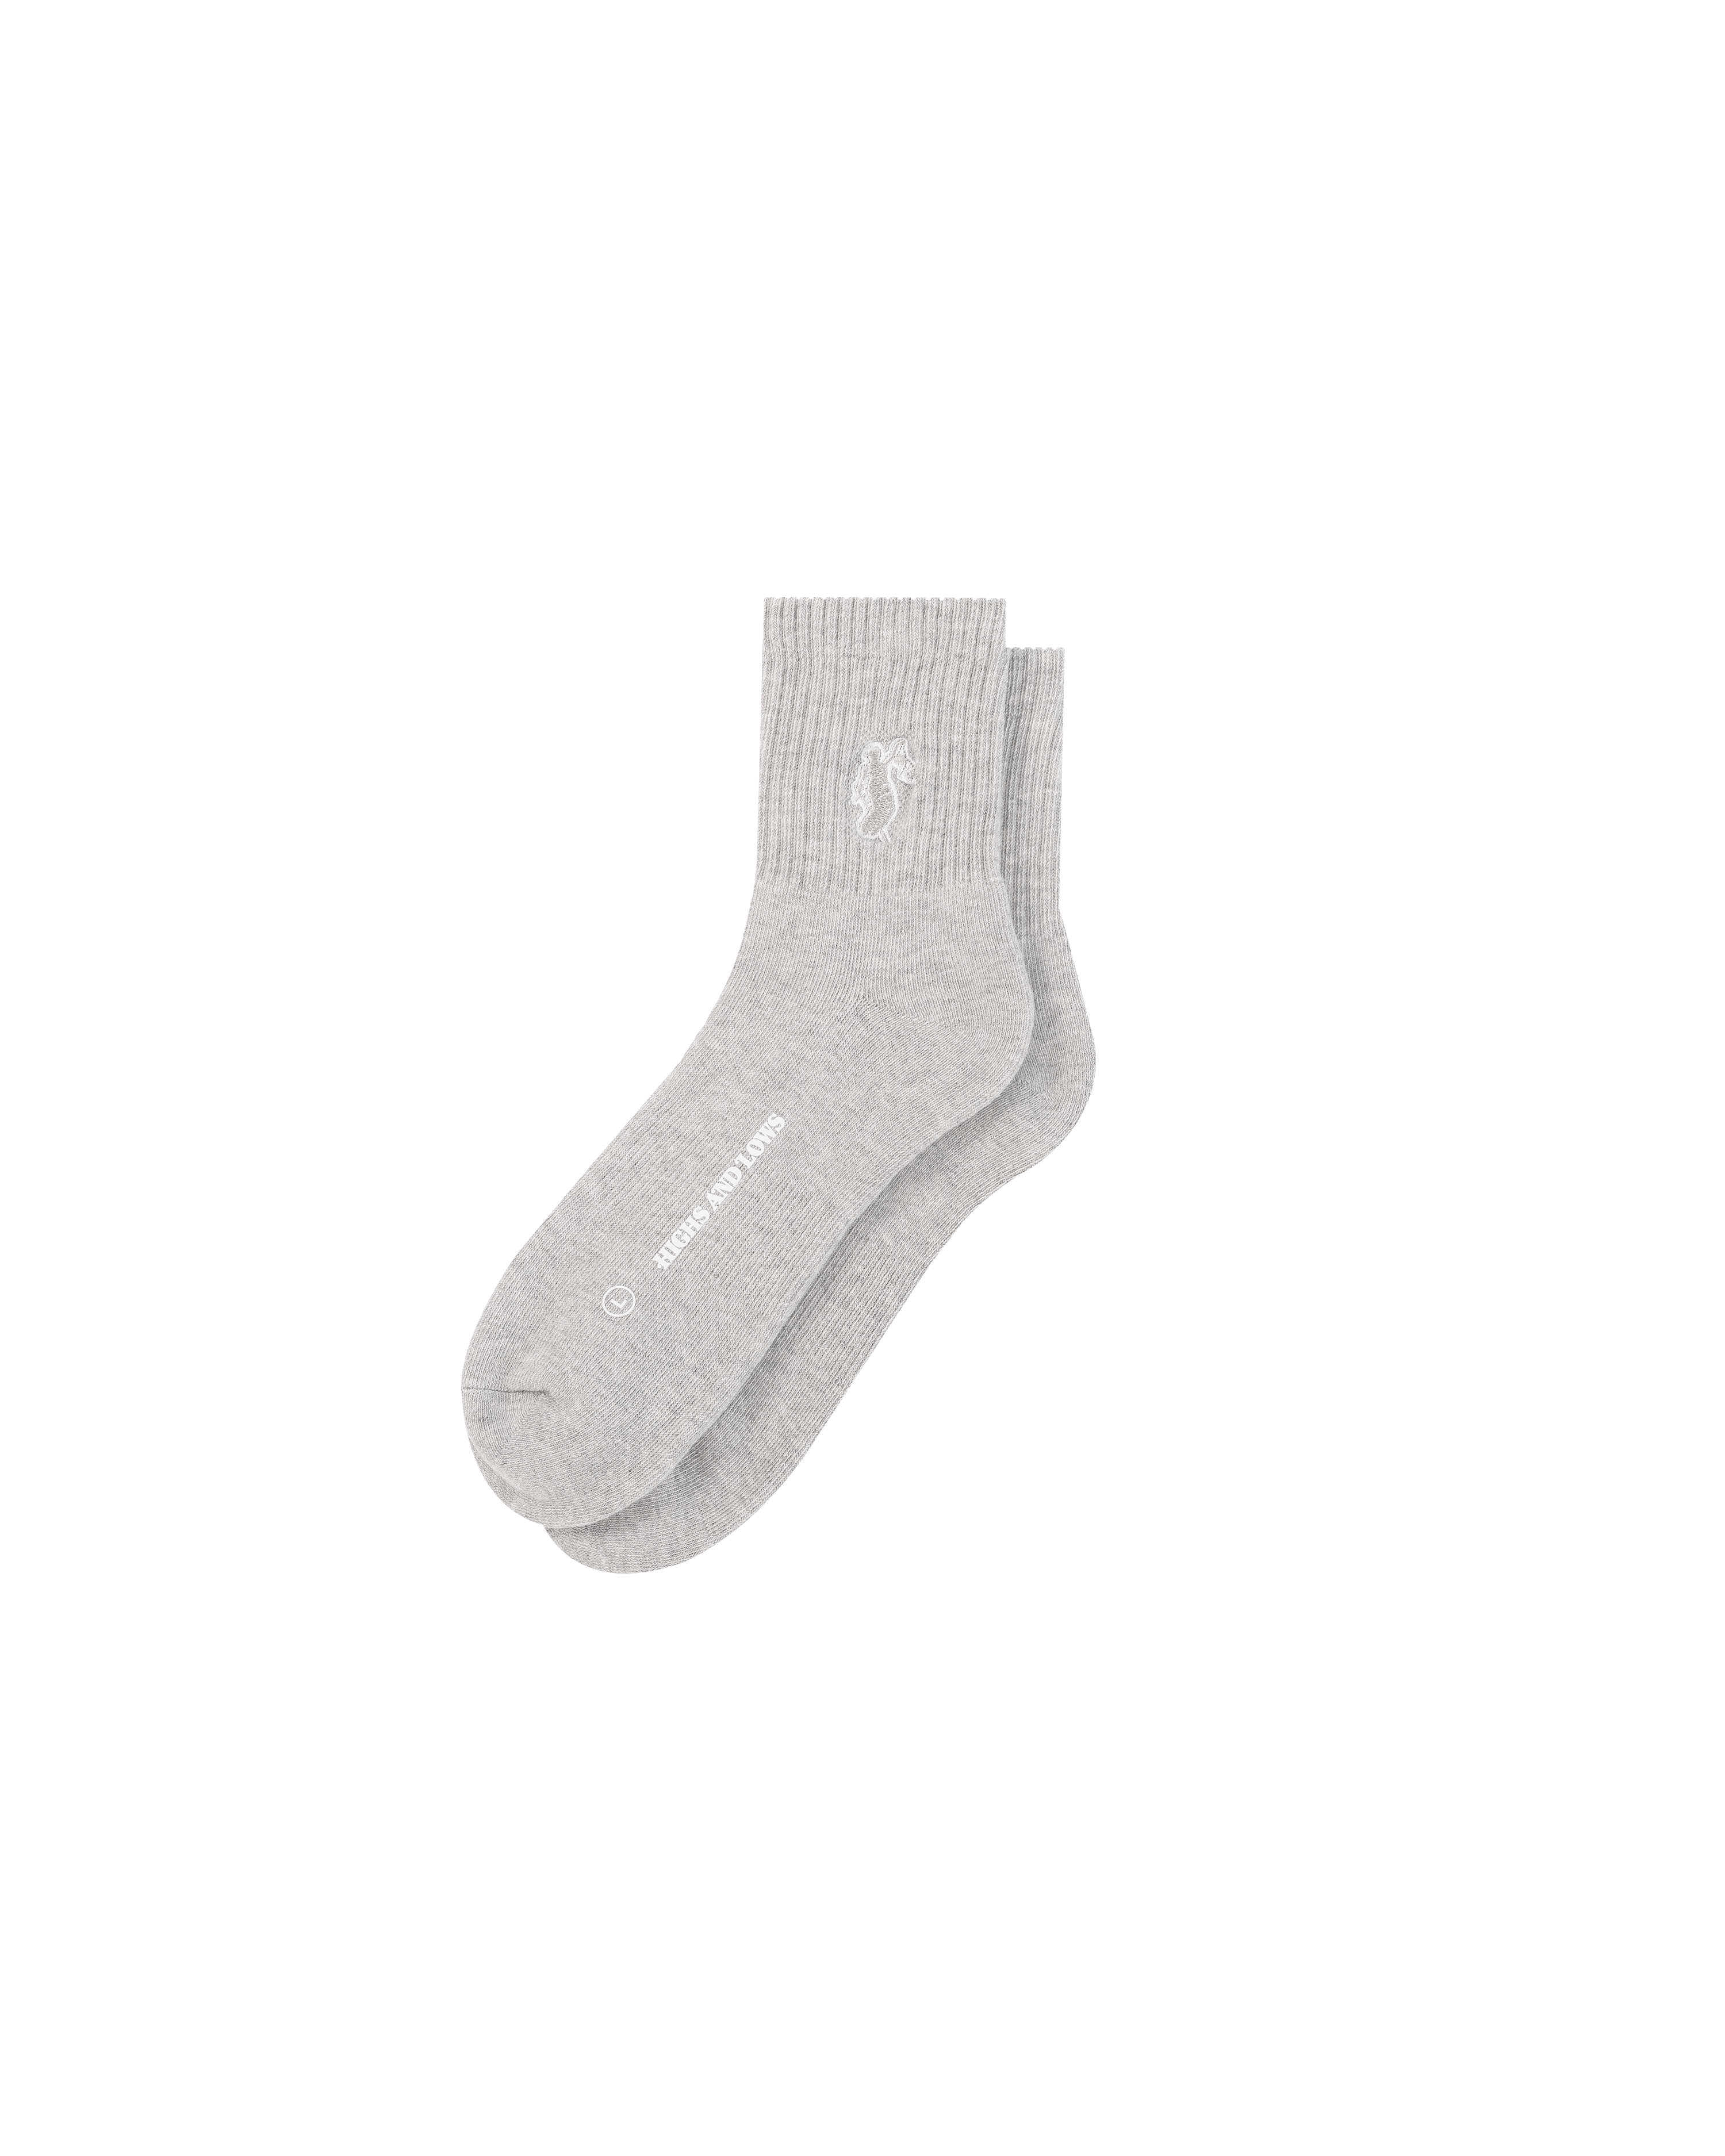 Lady Justice Socks Mid - Grey